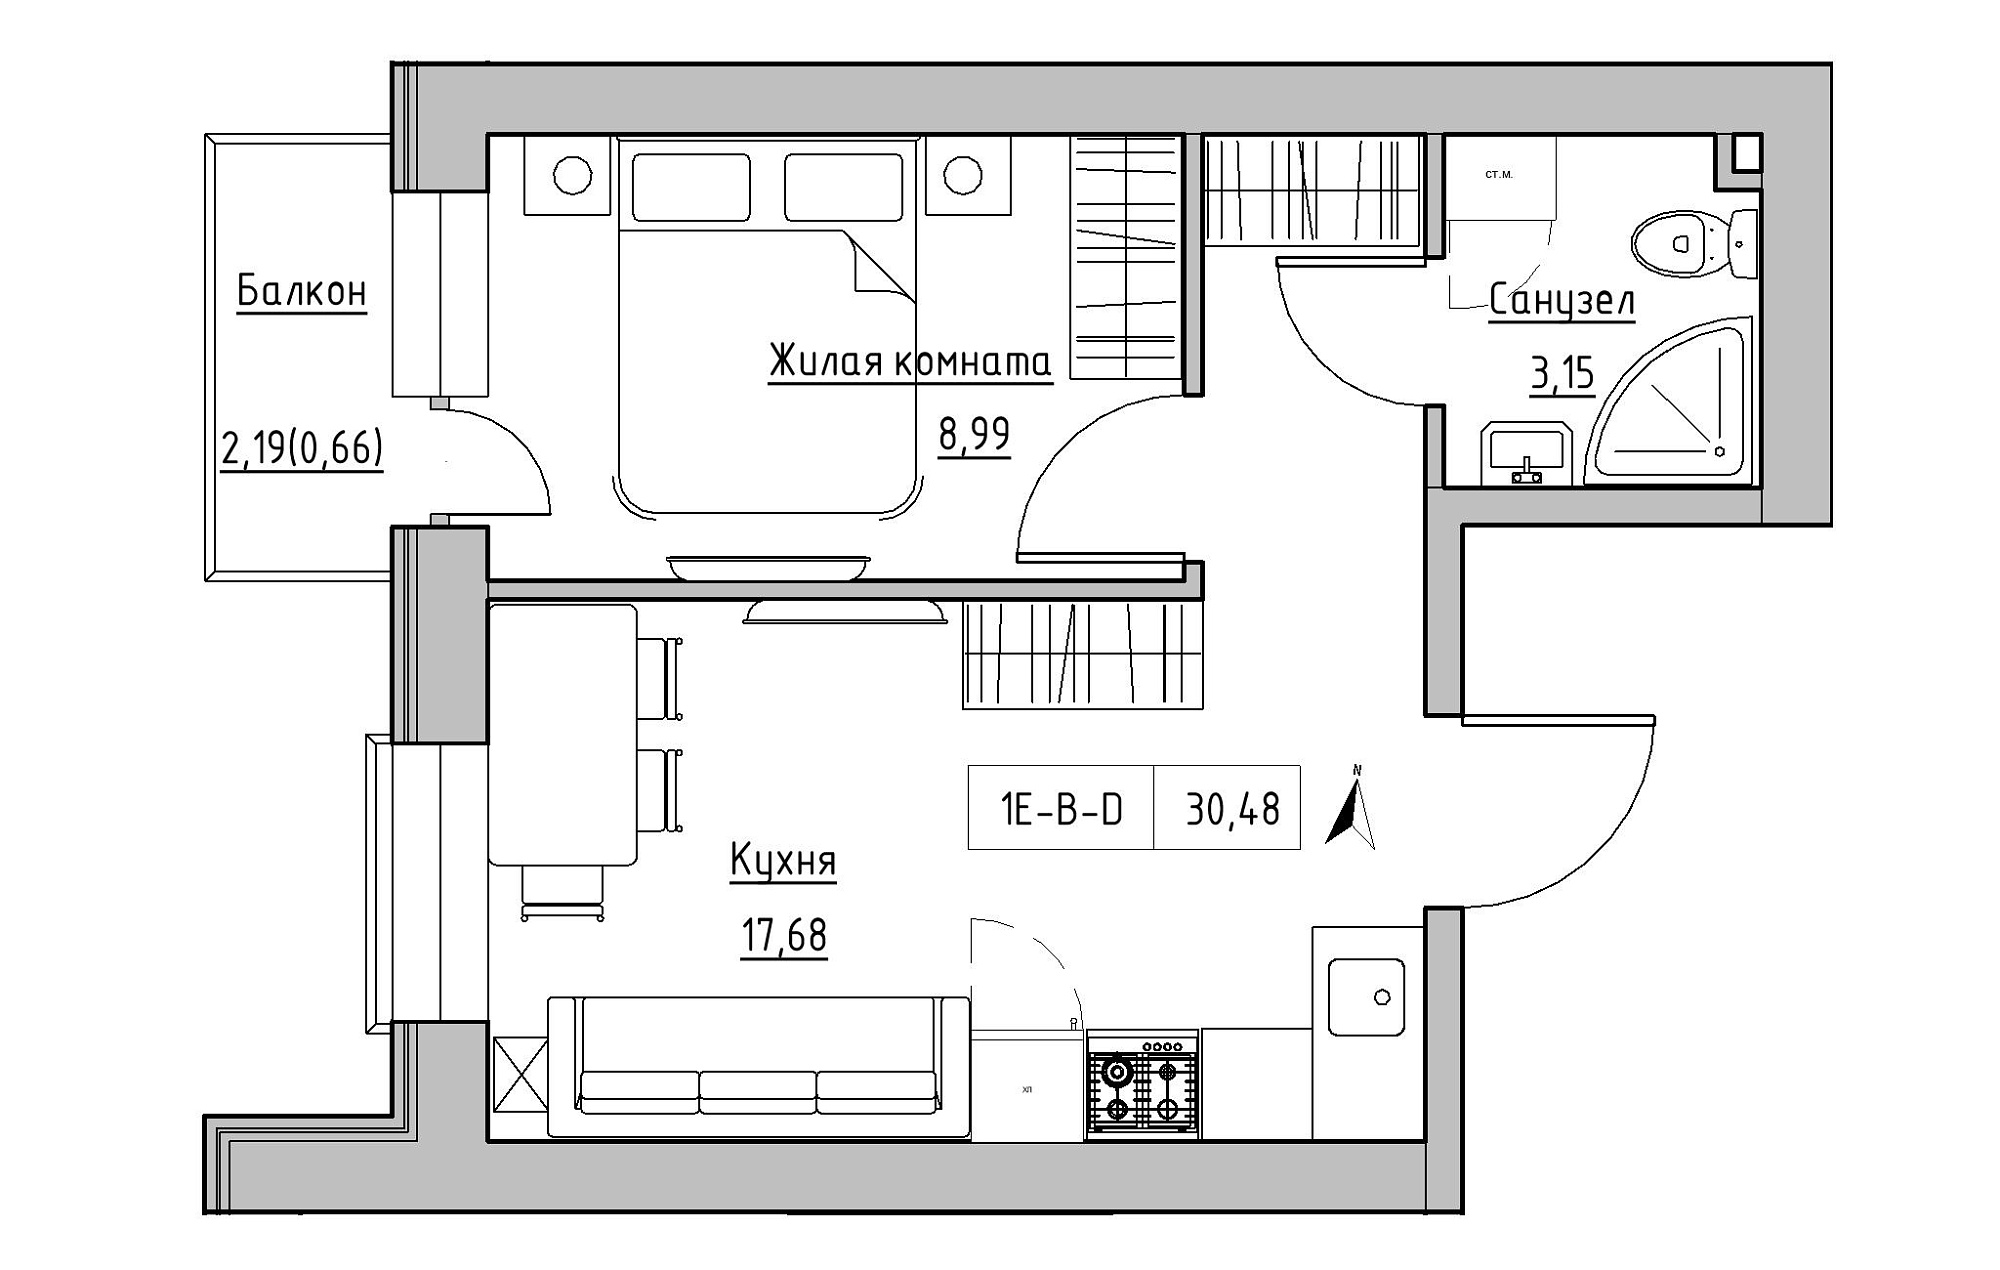 Planning 1-rm flats area 30.48m2, KS-019-02/0003.